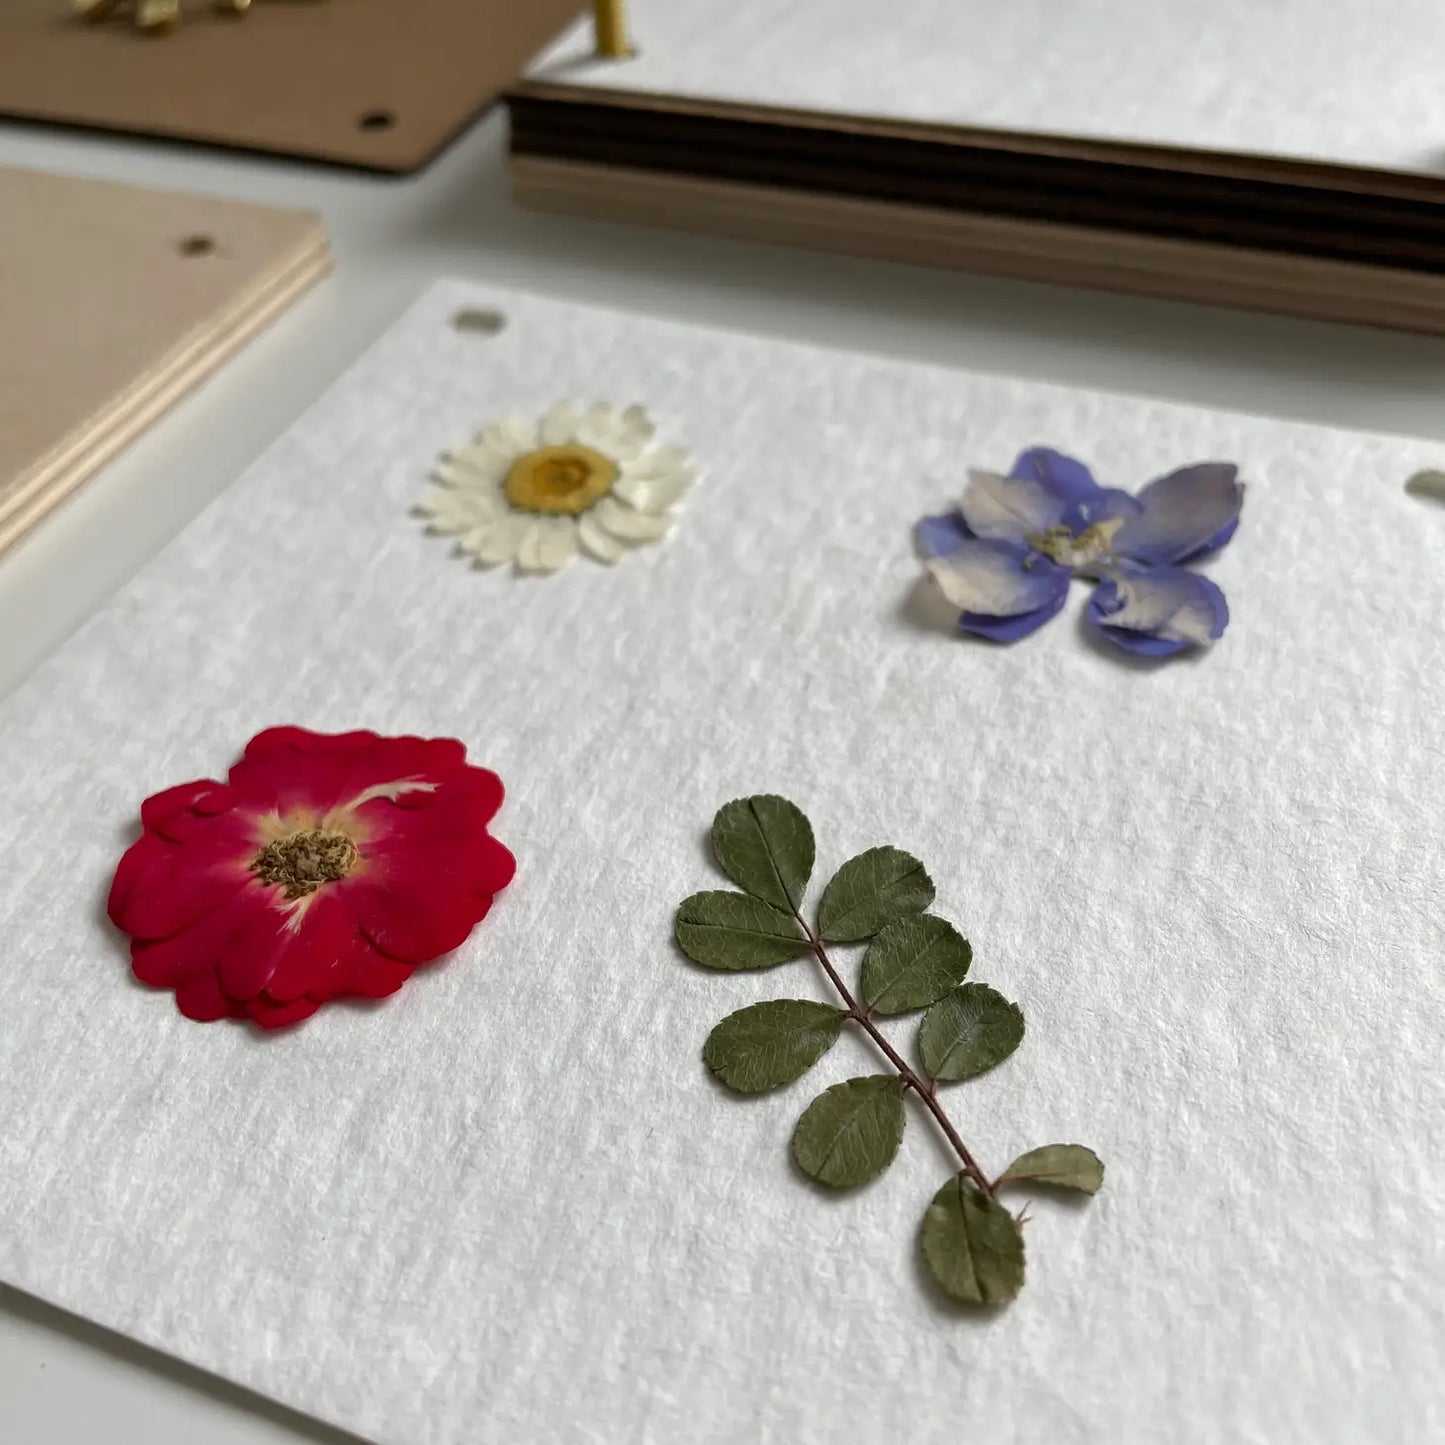 Square Flower Press Kit